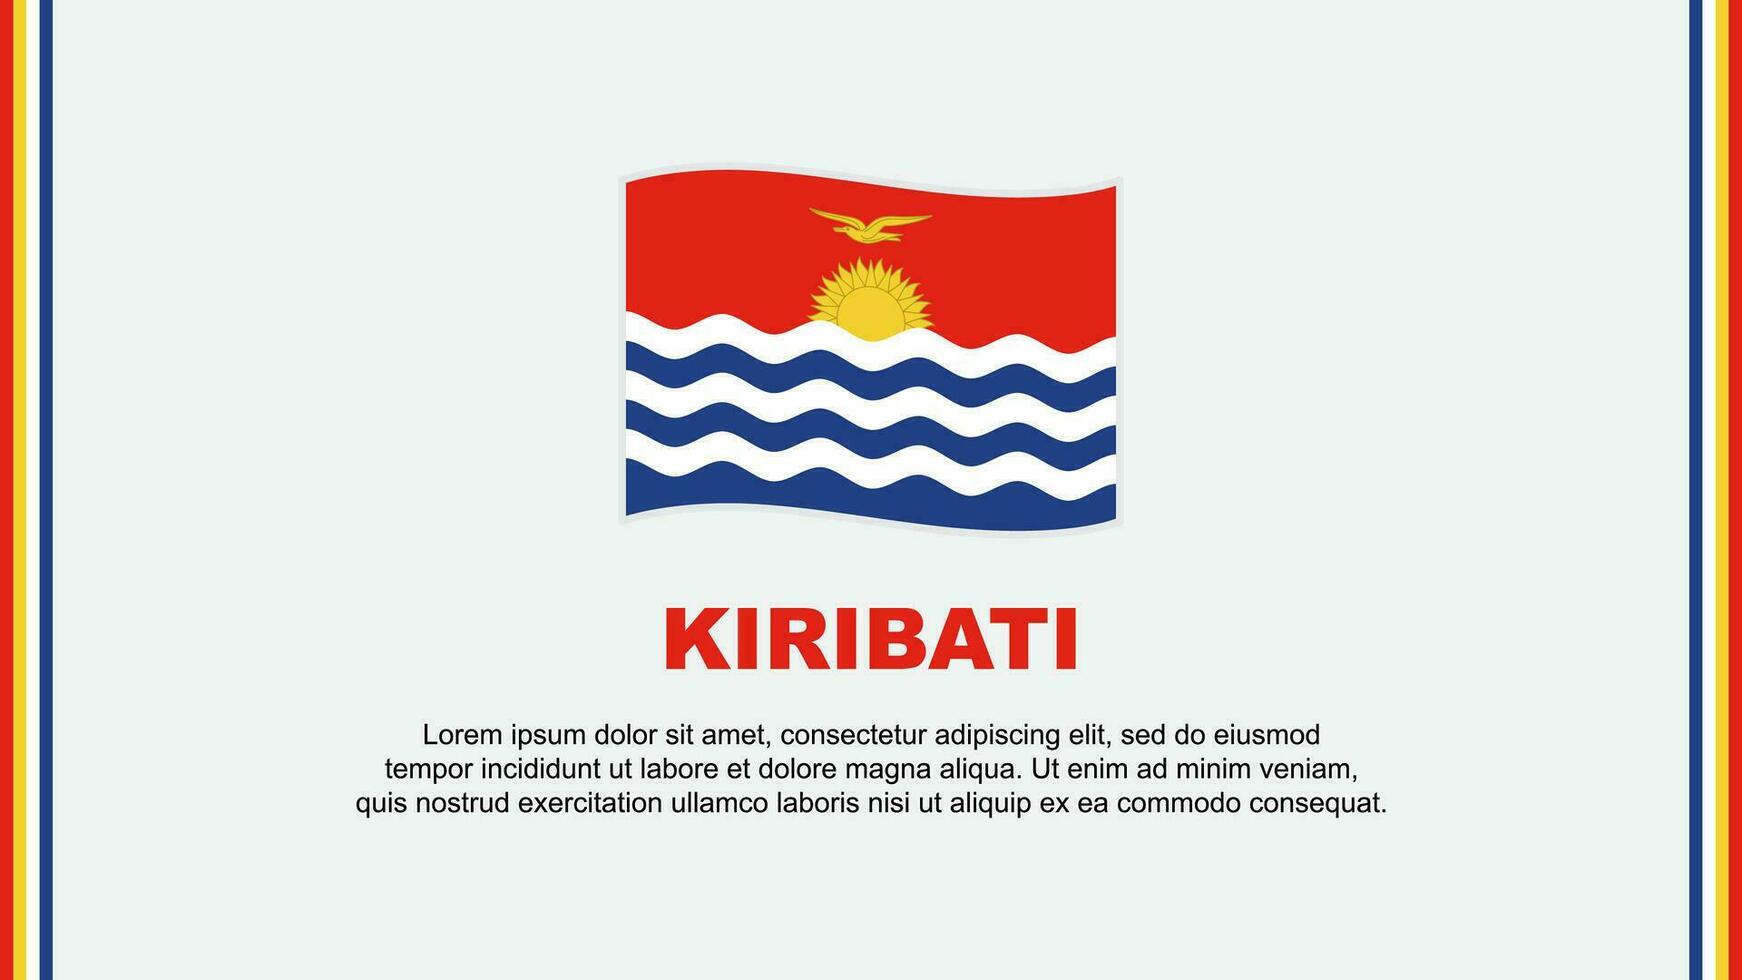 Kiribati vlag abstract achtergrond ontwerp sjabloon. Kiribati onafhankelijkheid dag banier sociaal media vector illustratie. Kiribati tekenfilm